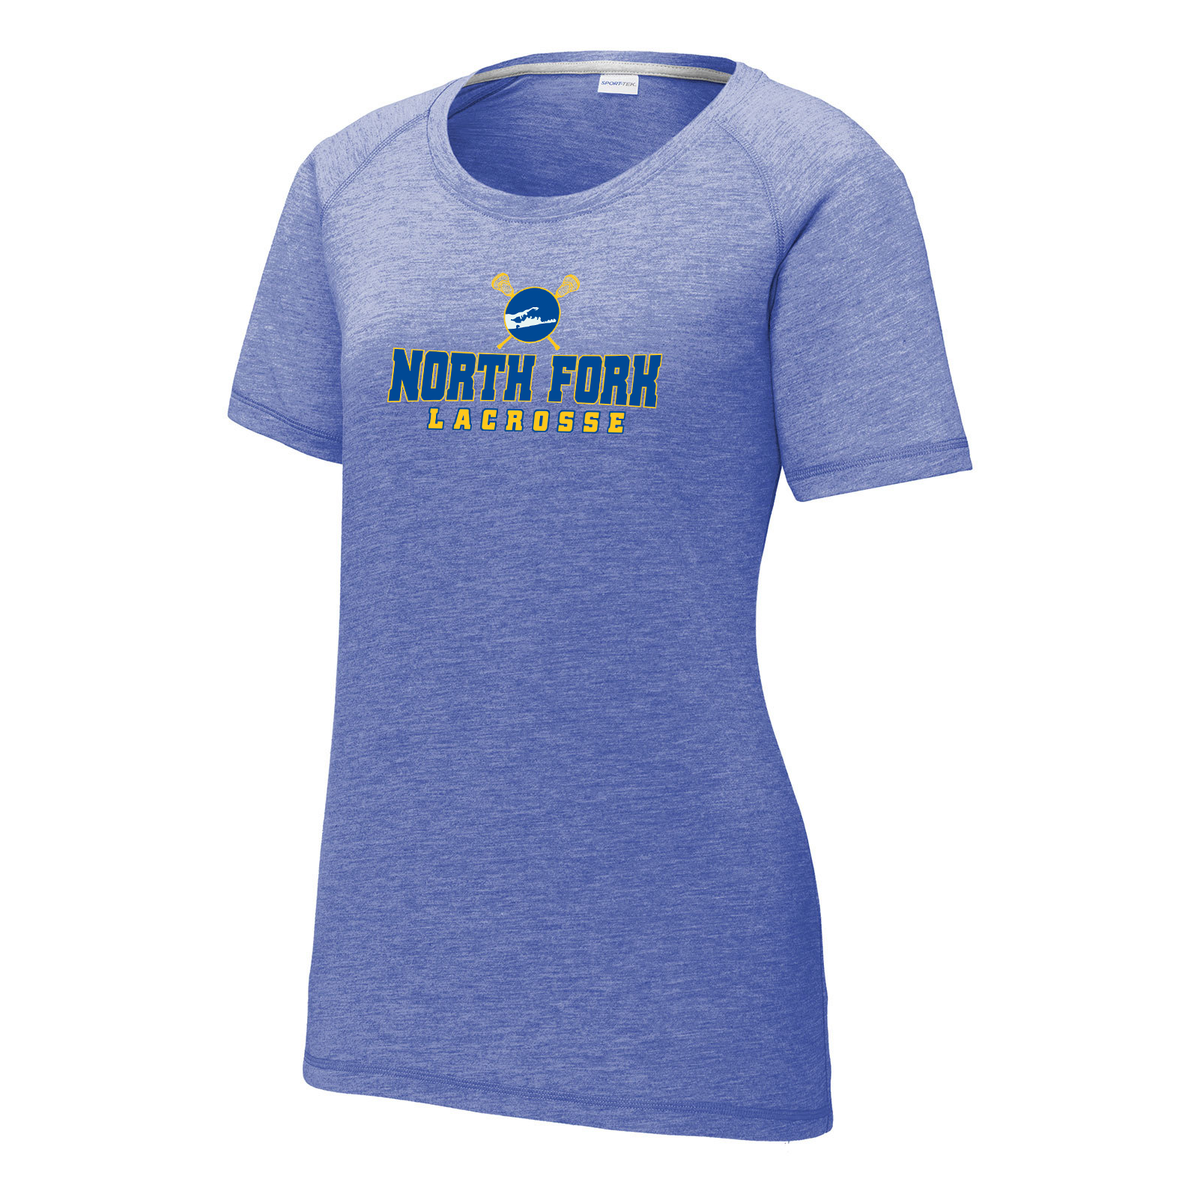 North Fork Lacrosse Women's Raglan CottonTouch